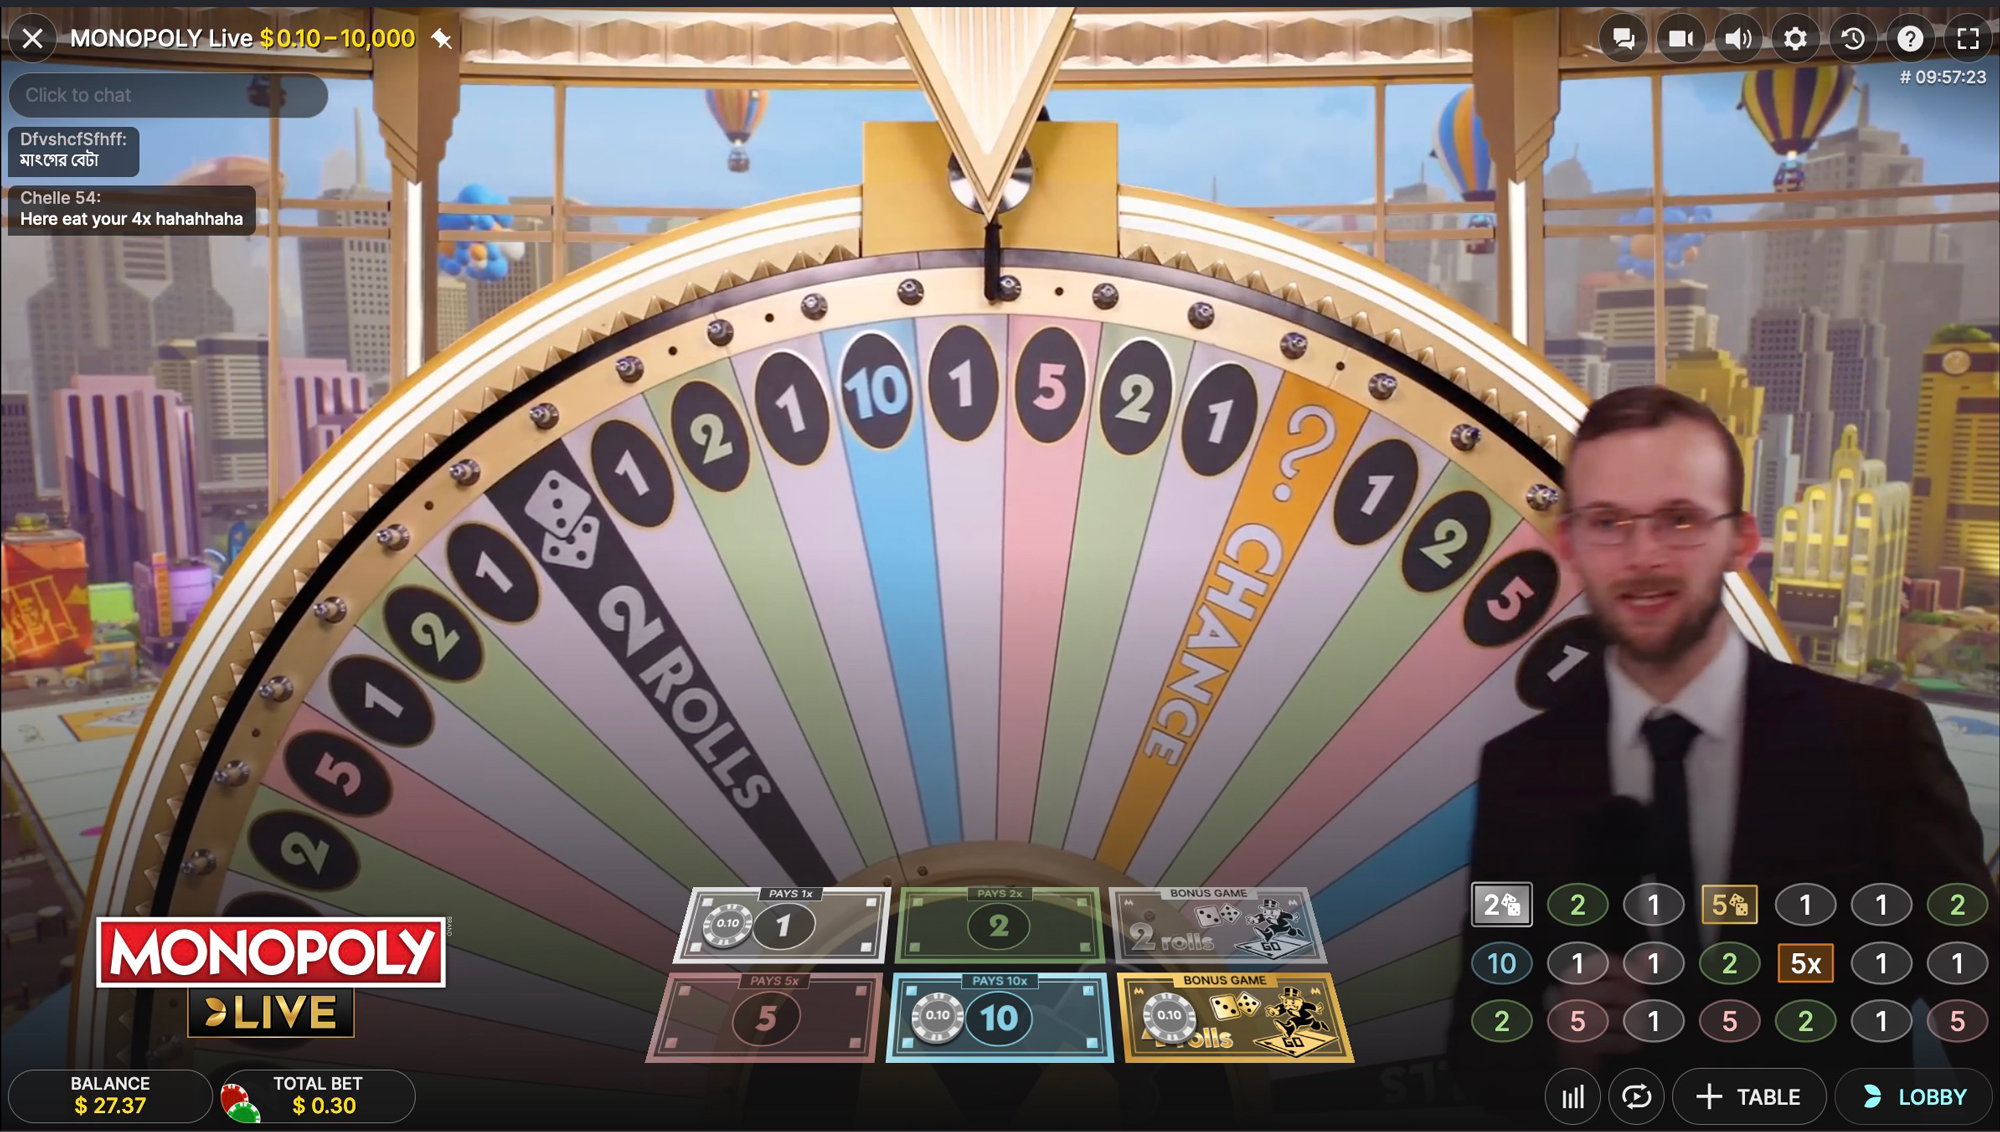 Interface do jogo Monopoly Live